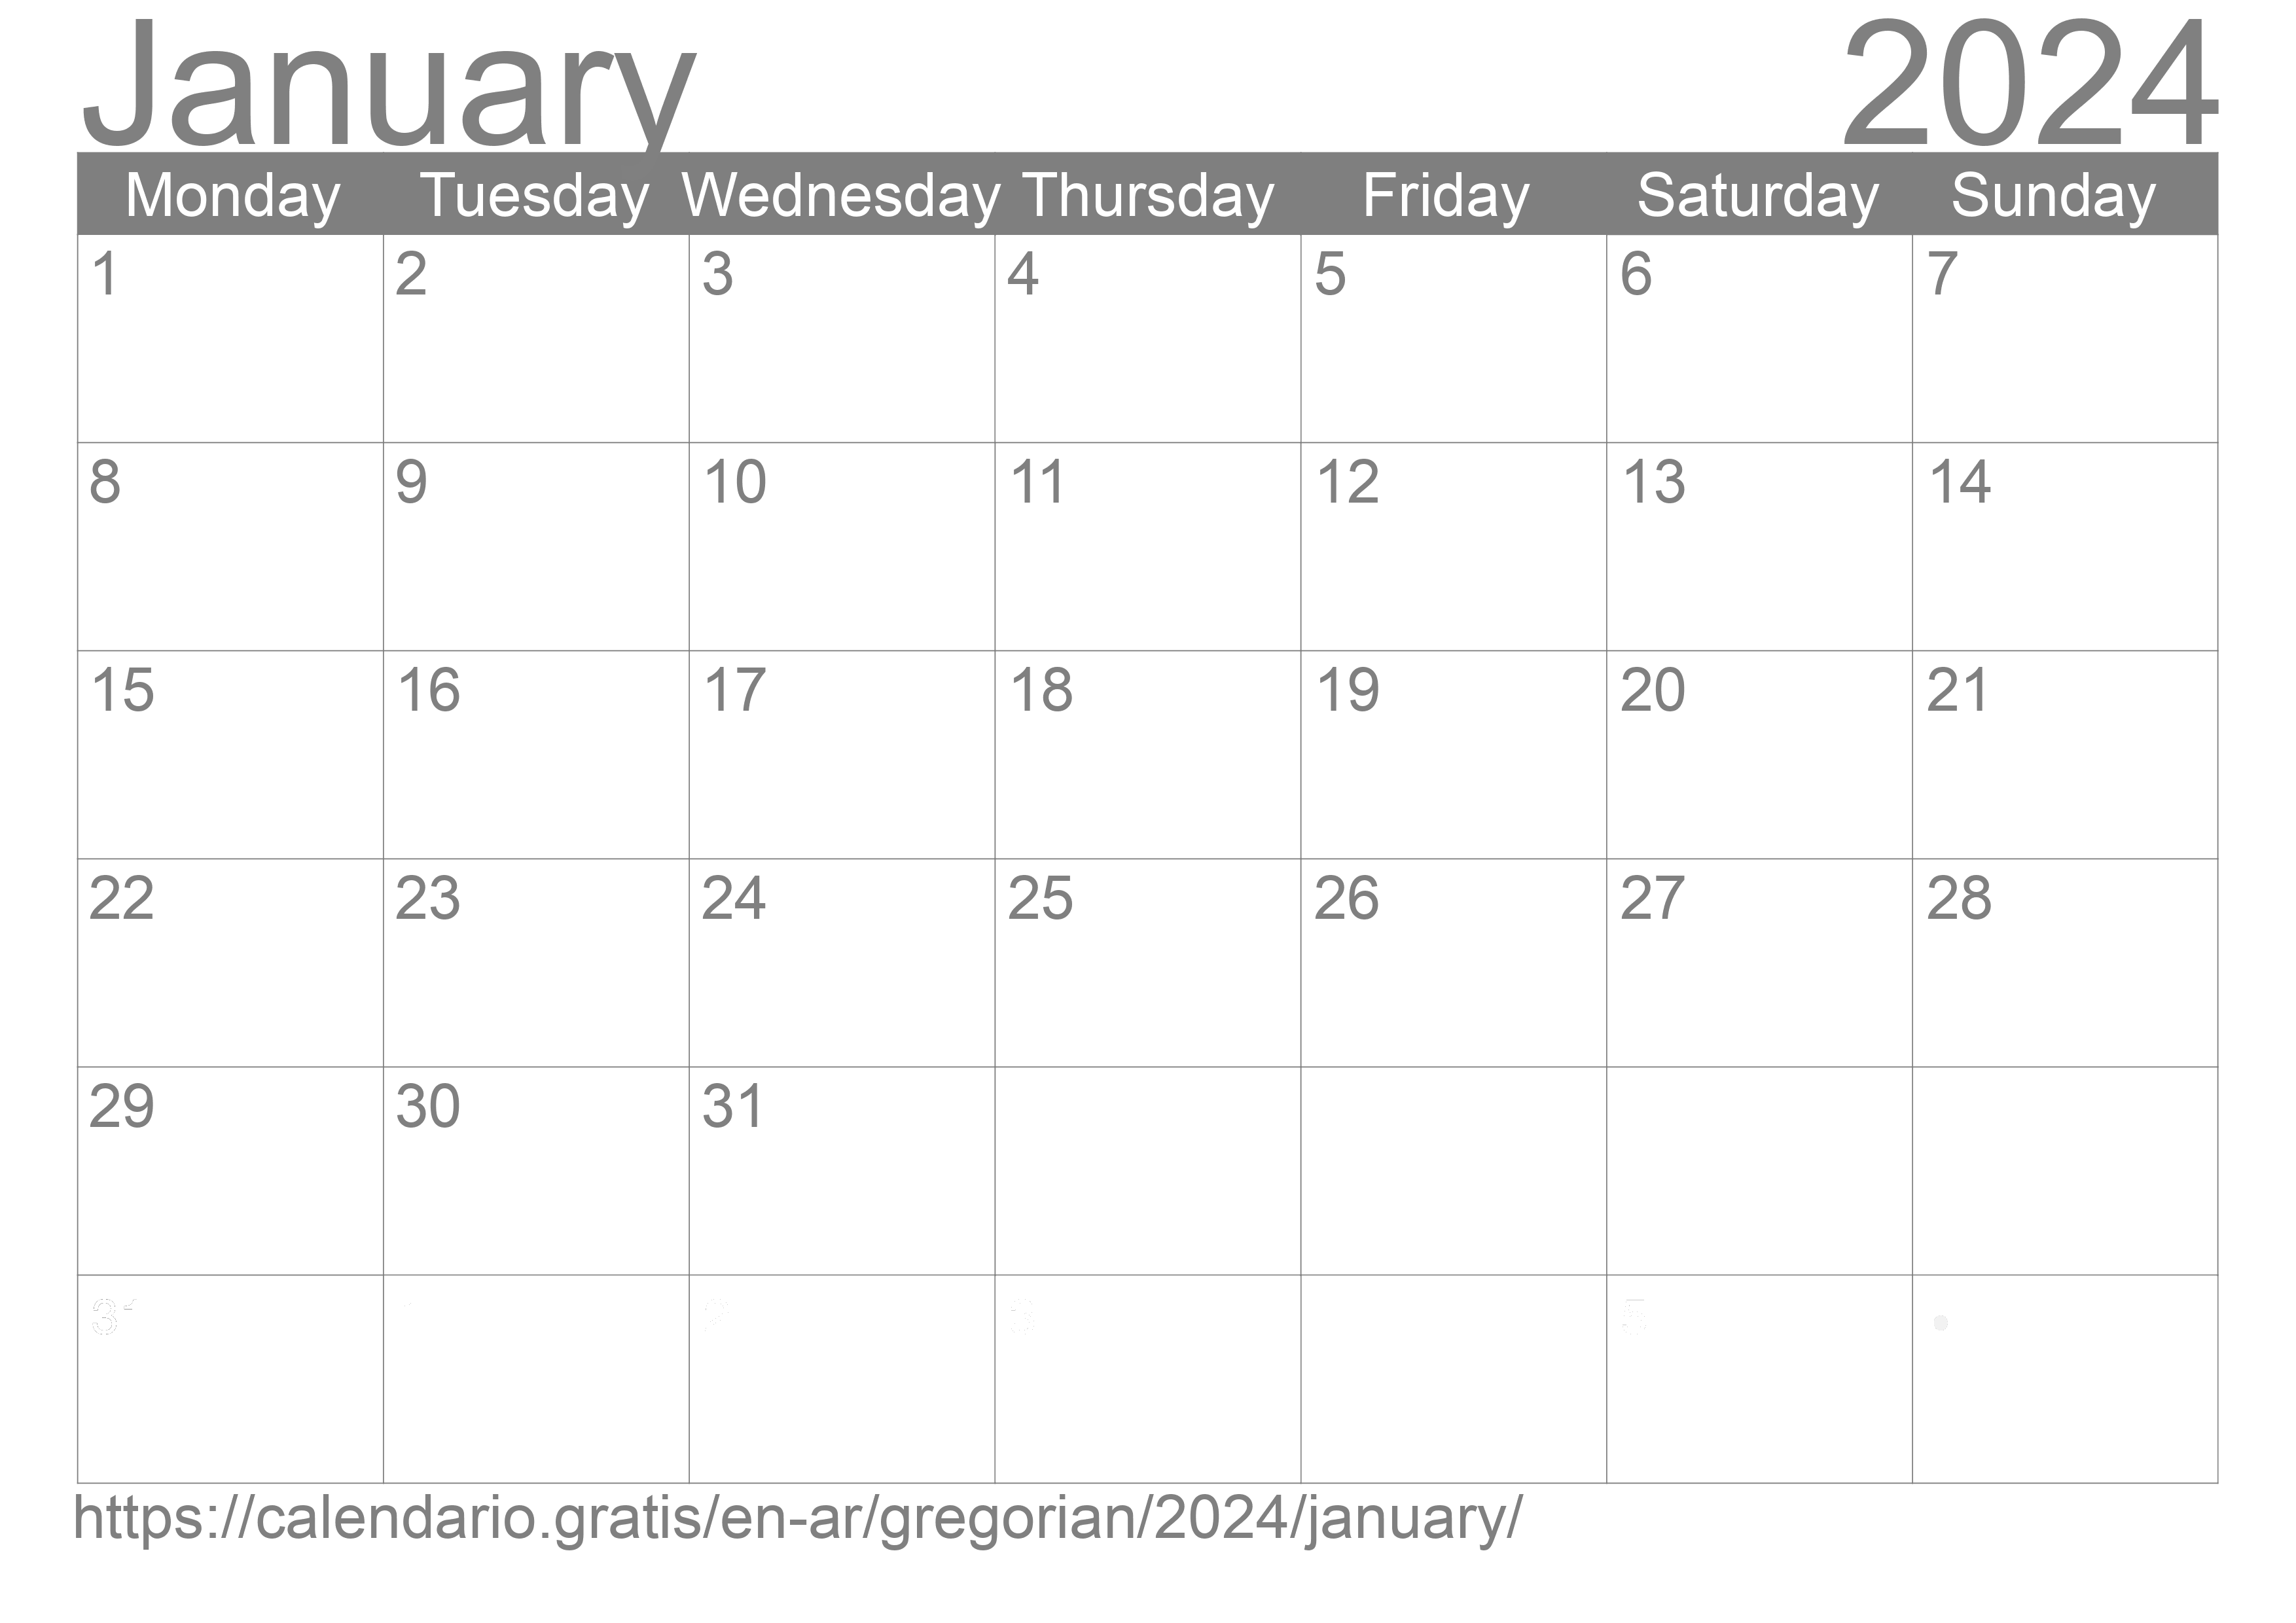 Calendar January 2024 to print